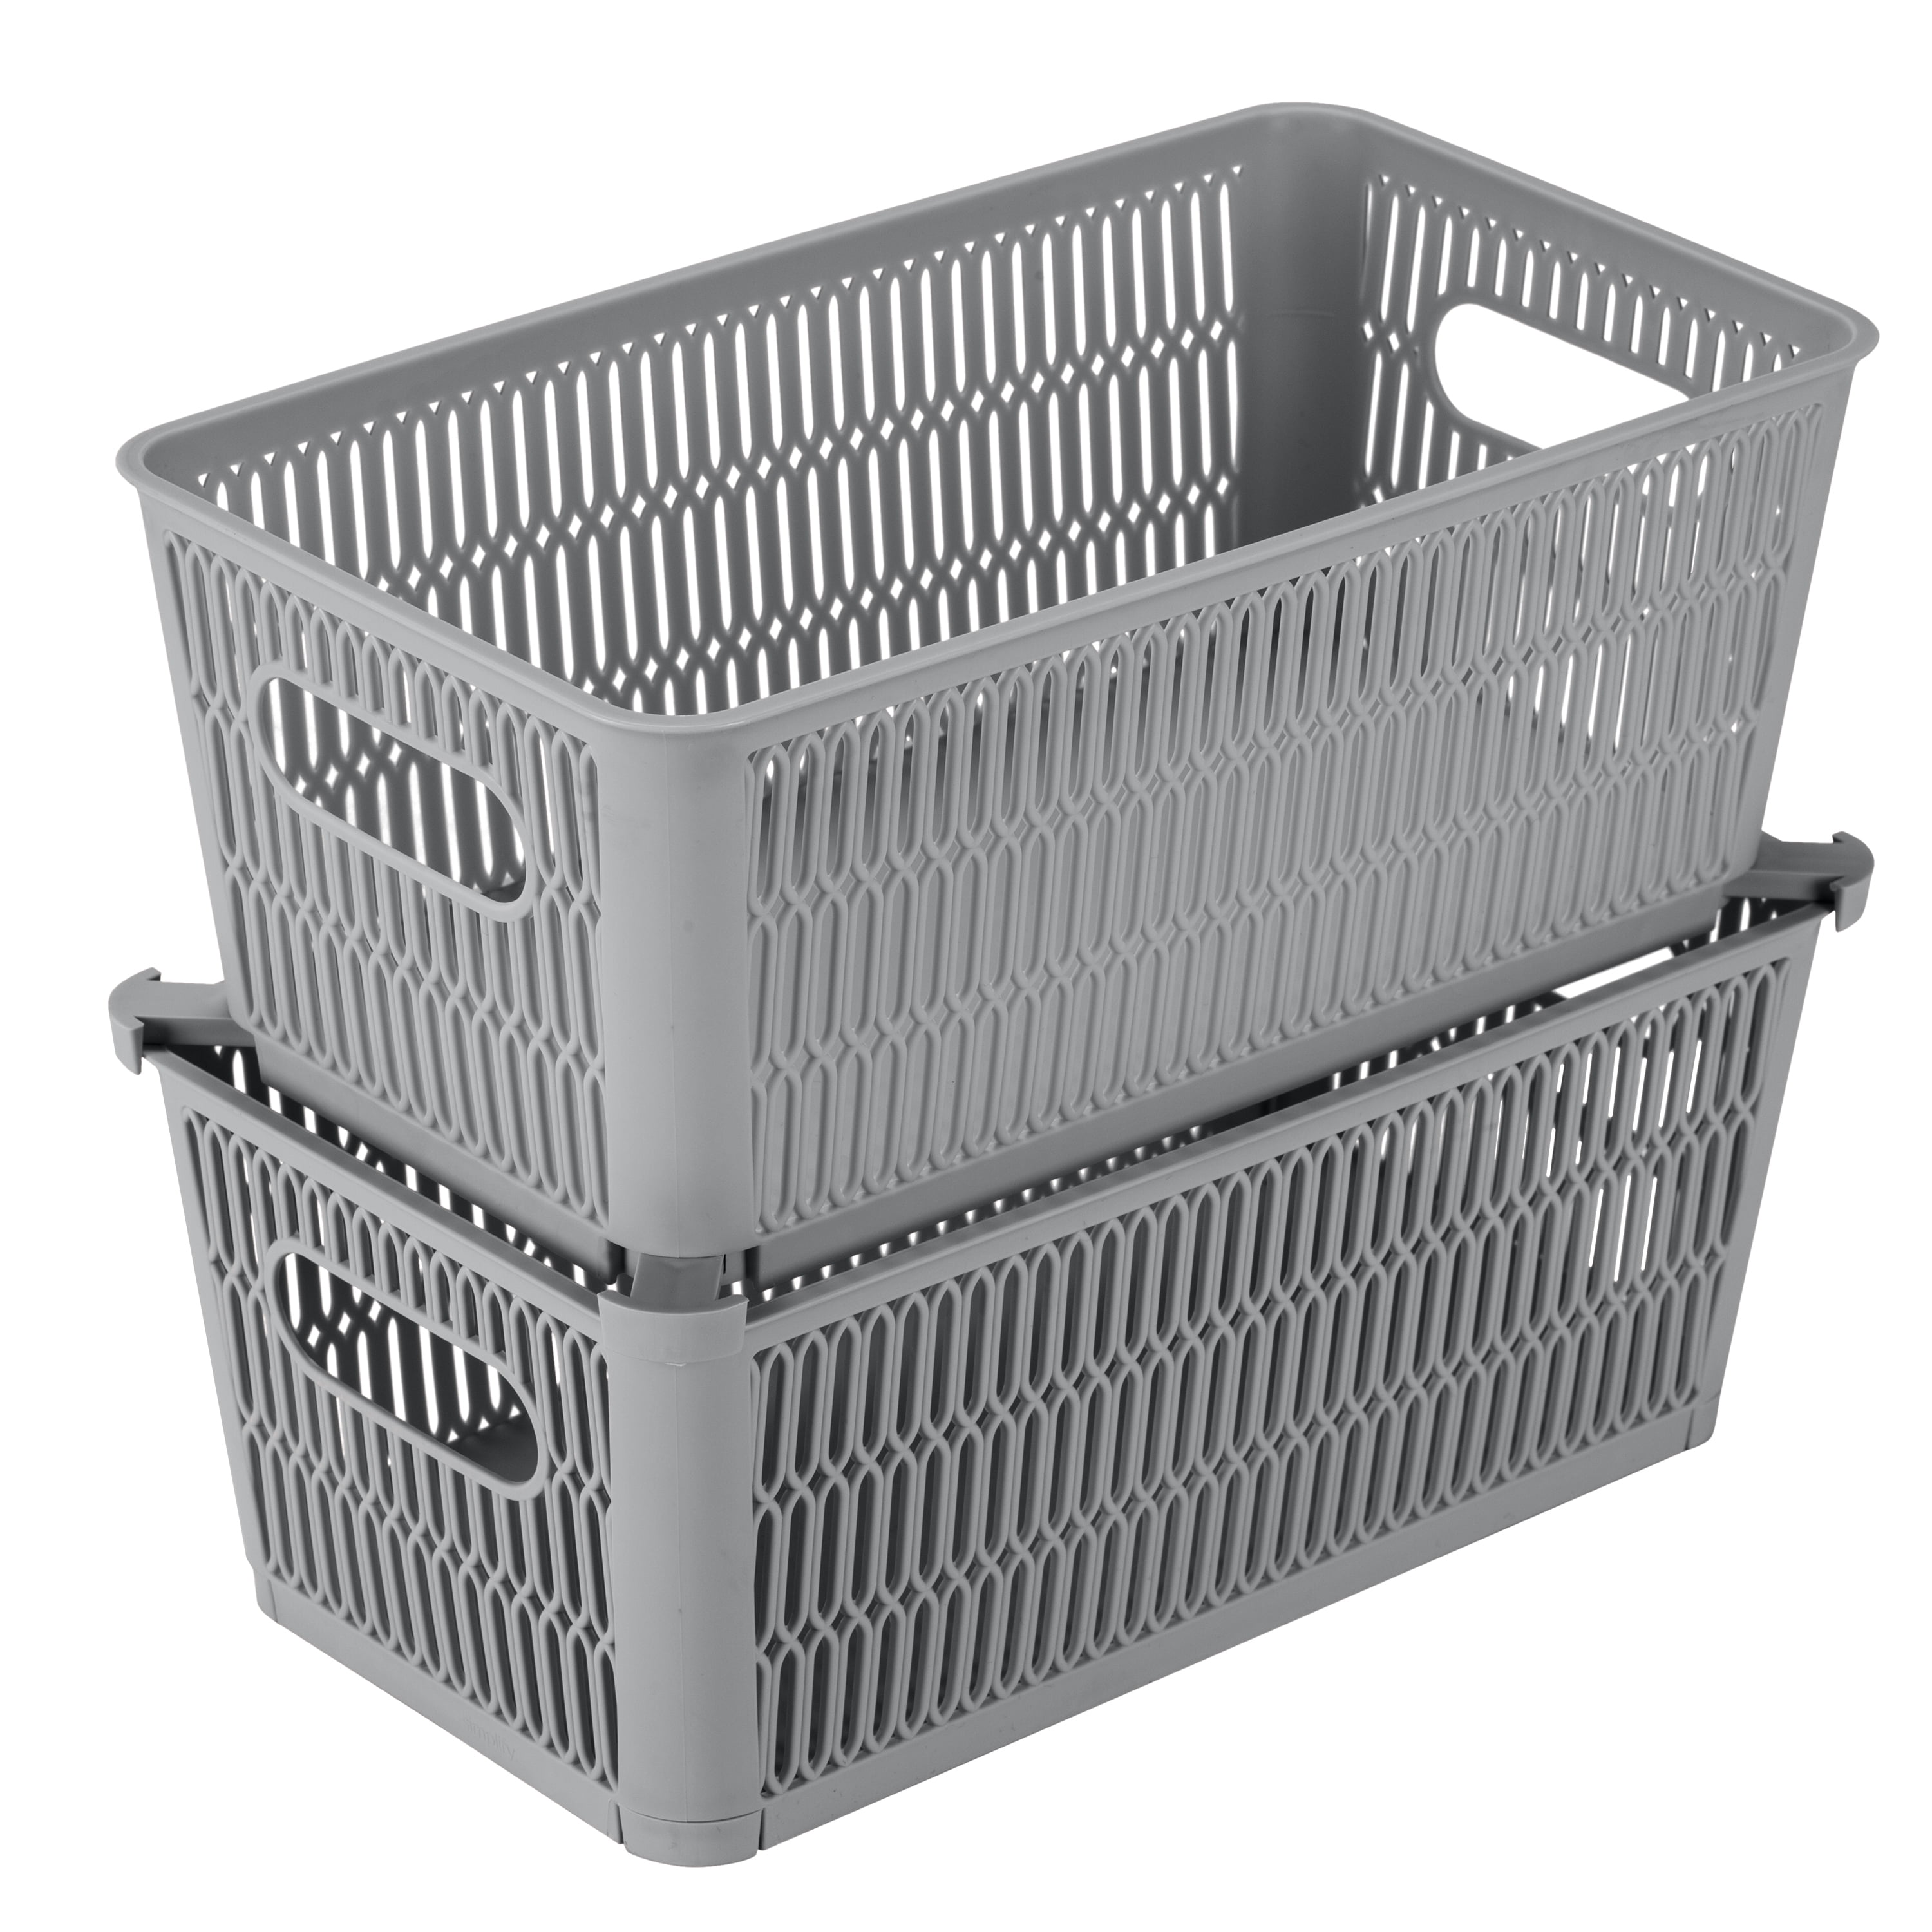 Rebrilliant 2 Pack Stackable Metal Utility Storage Basket Bin With